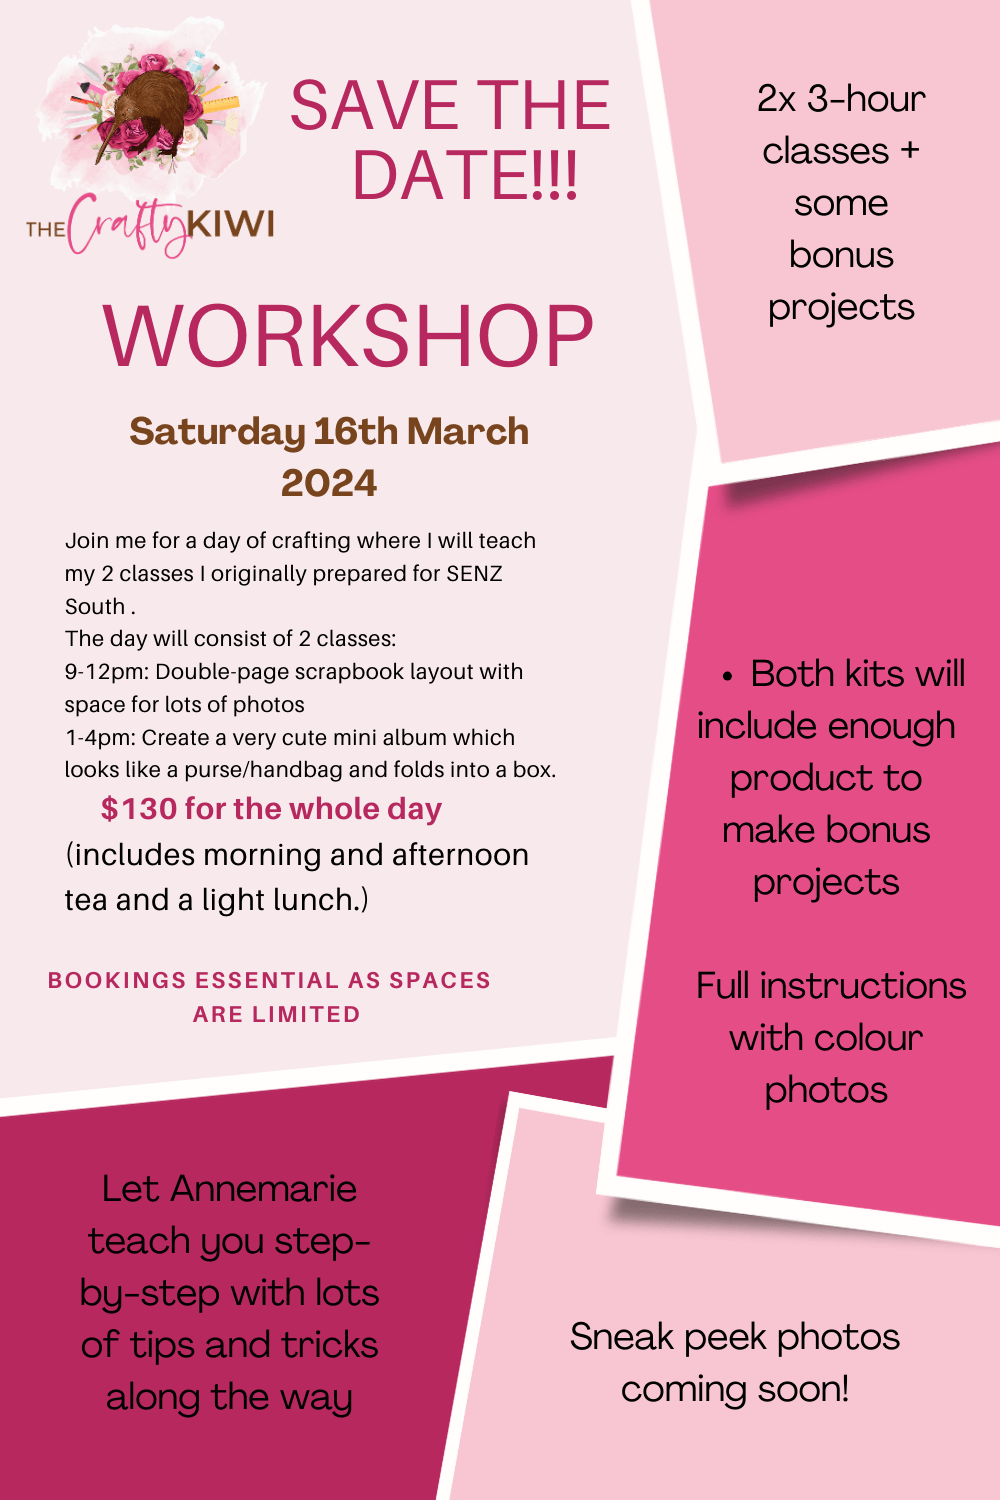 Annemarie's Workshop Saturday 16th March 2024 - The Crafty Kiwi